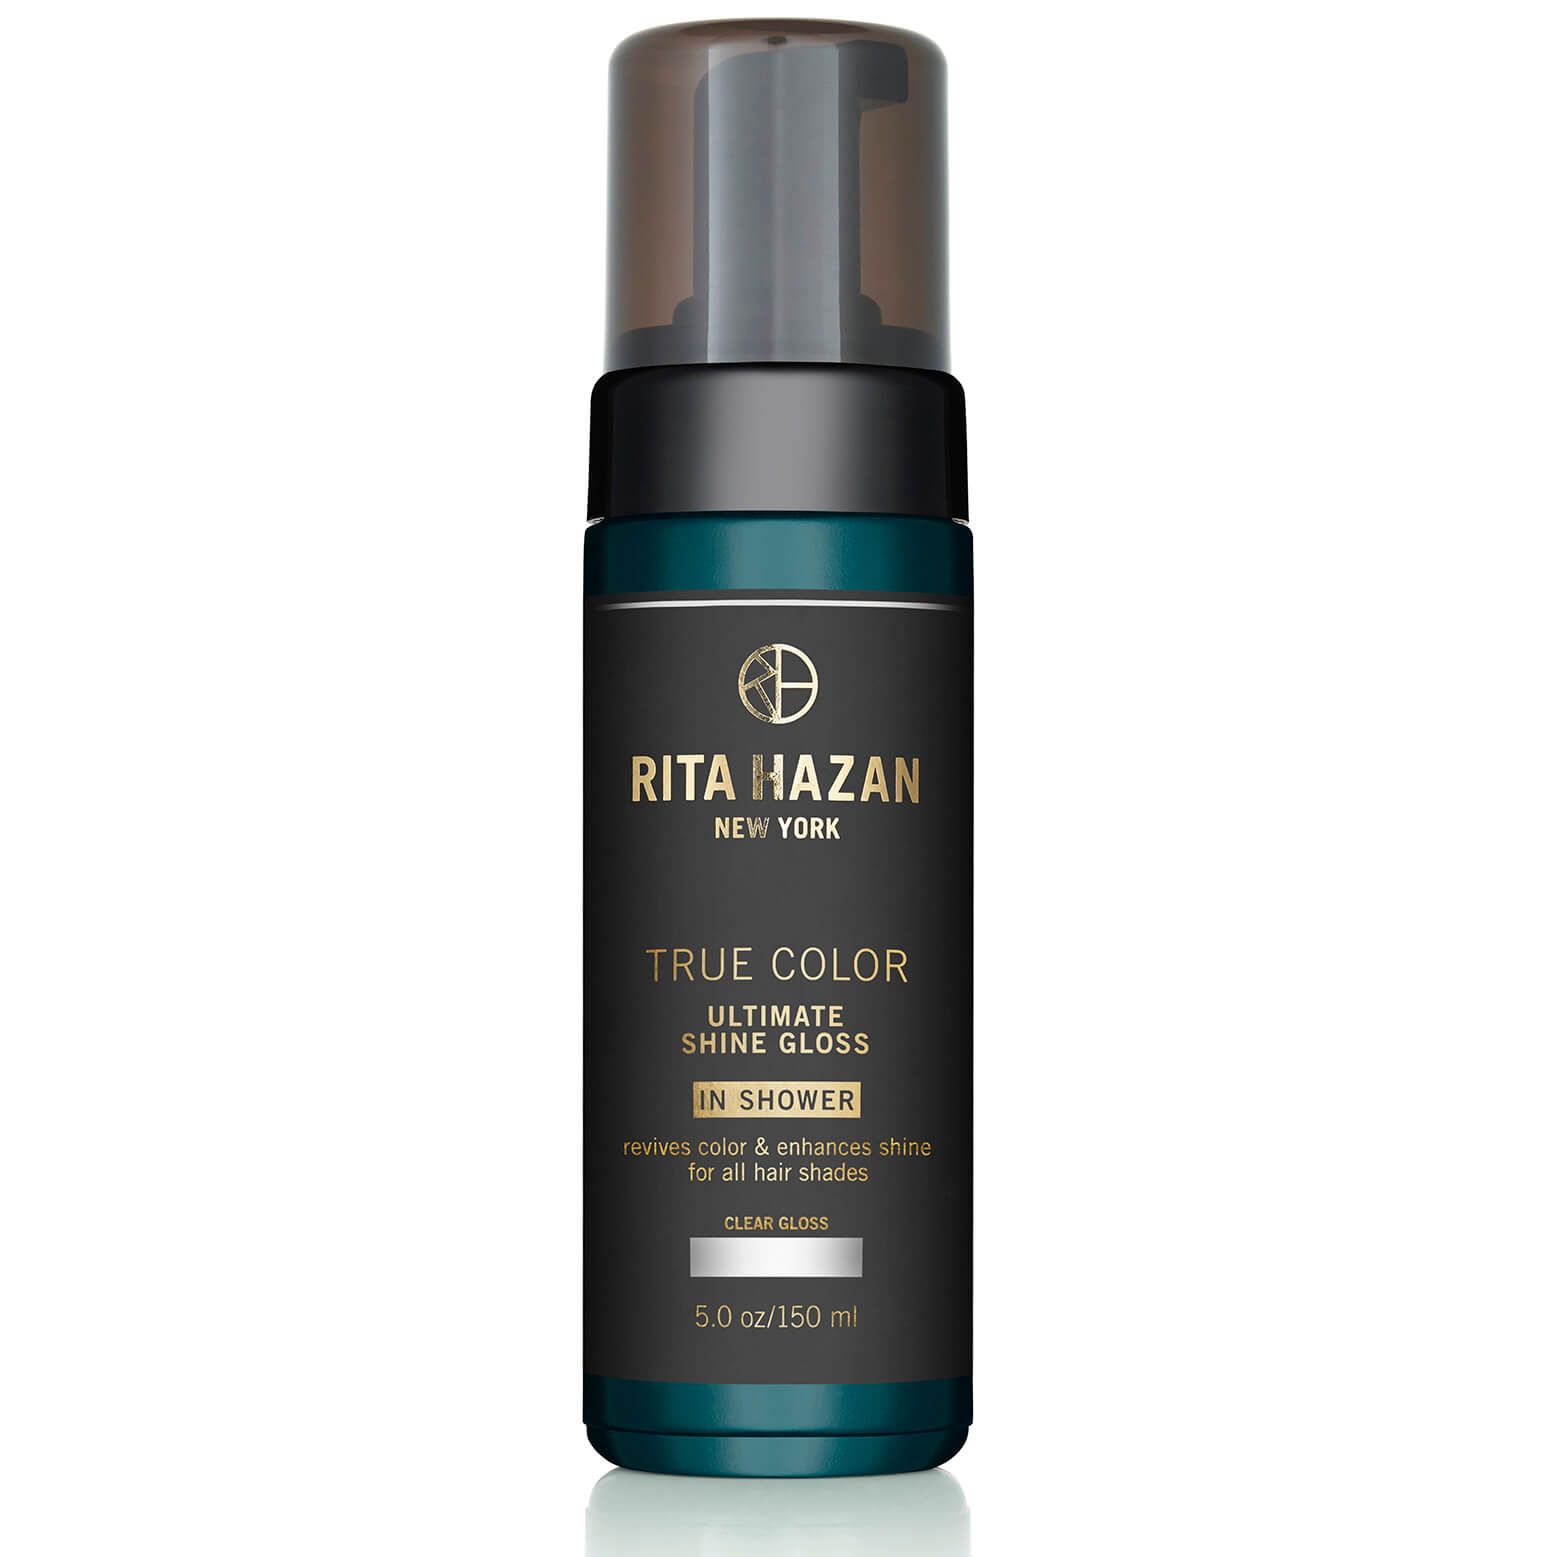 Rita Hazan True Color Ultimate Shine Gloss in Clear